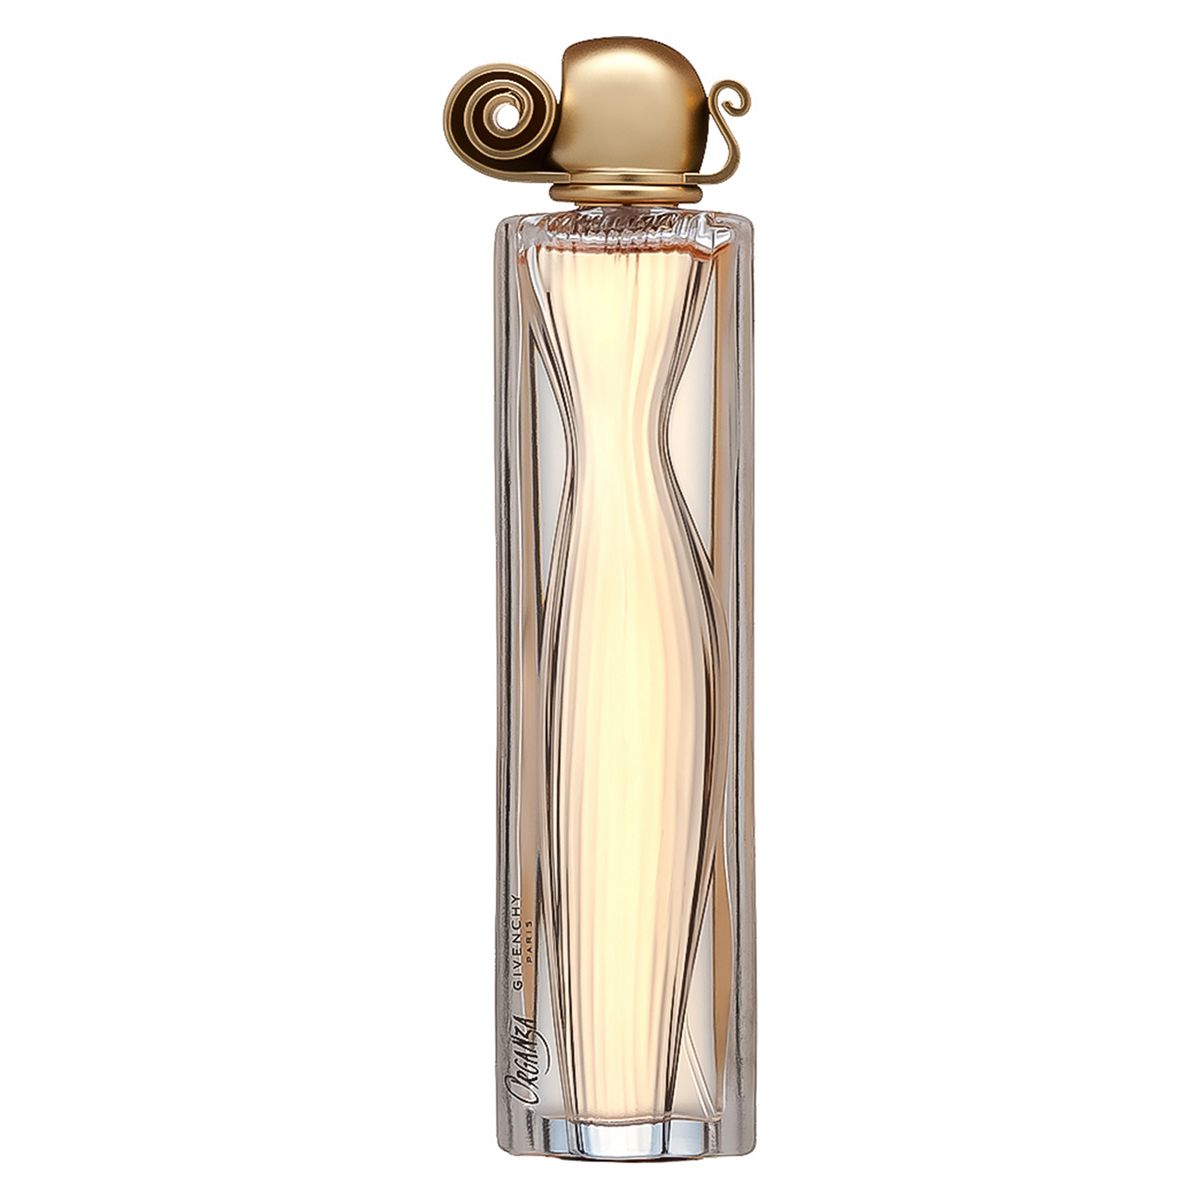 Givenchy Organza Eau de Parfum 50ml